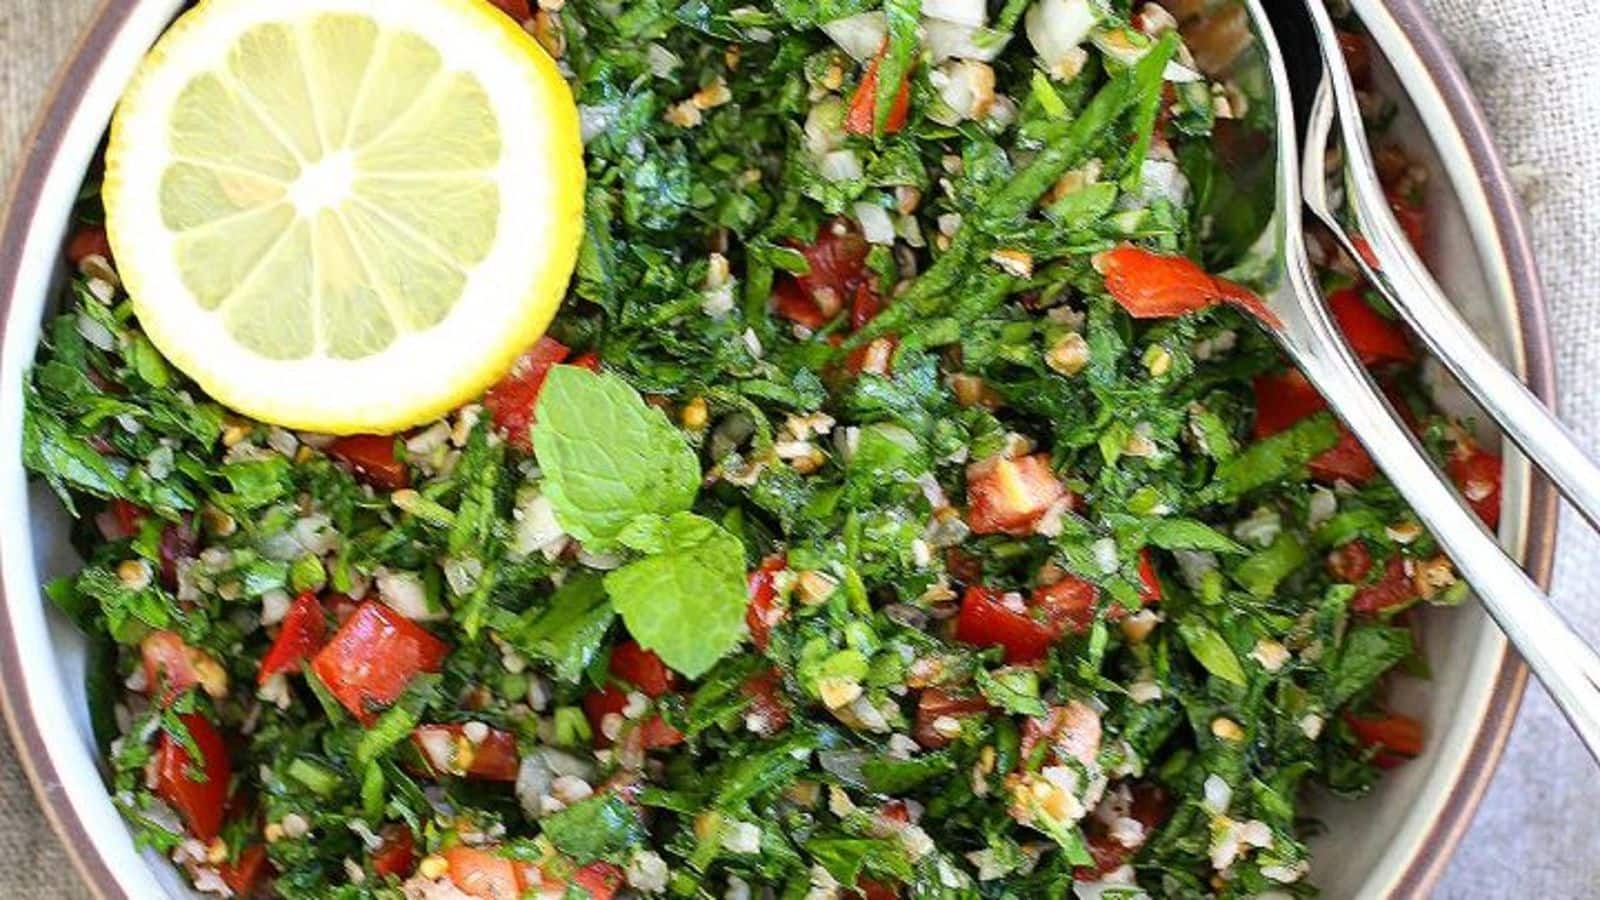 Recipe: Cook Lebanese tabouli salad at home